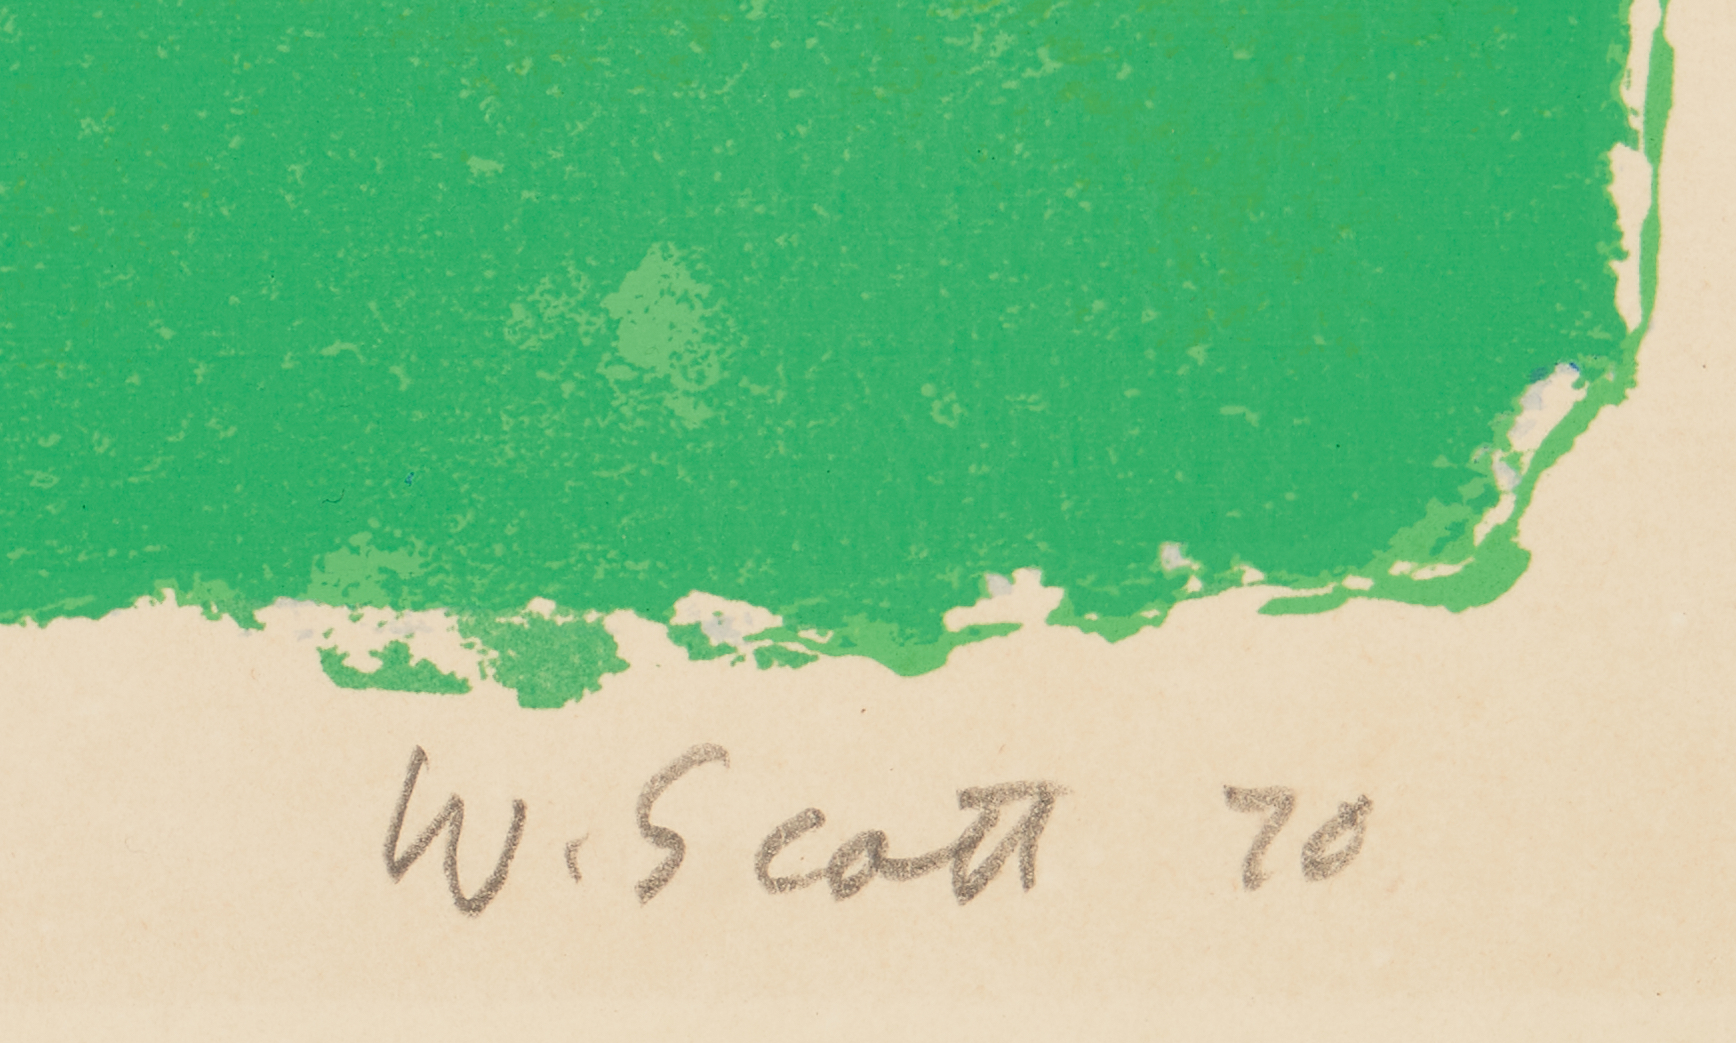 Lot 571: William Scott Screenprint, Bottle and Bowl, Blues on Green